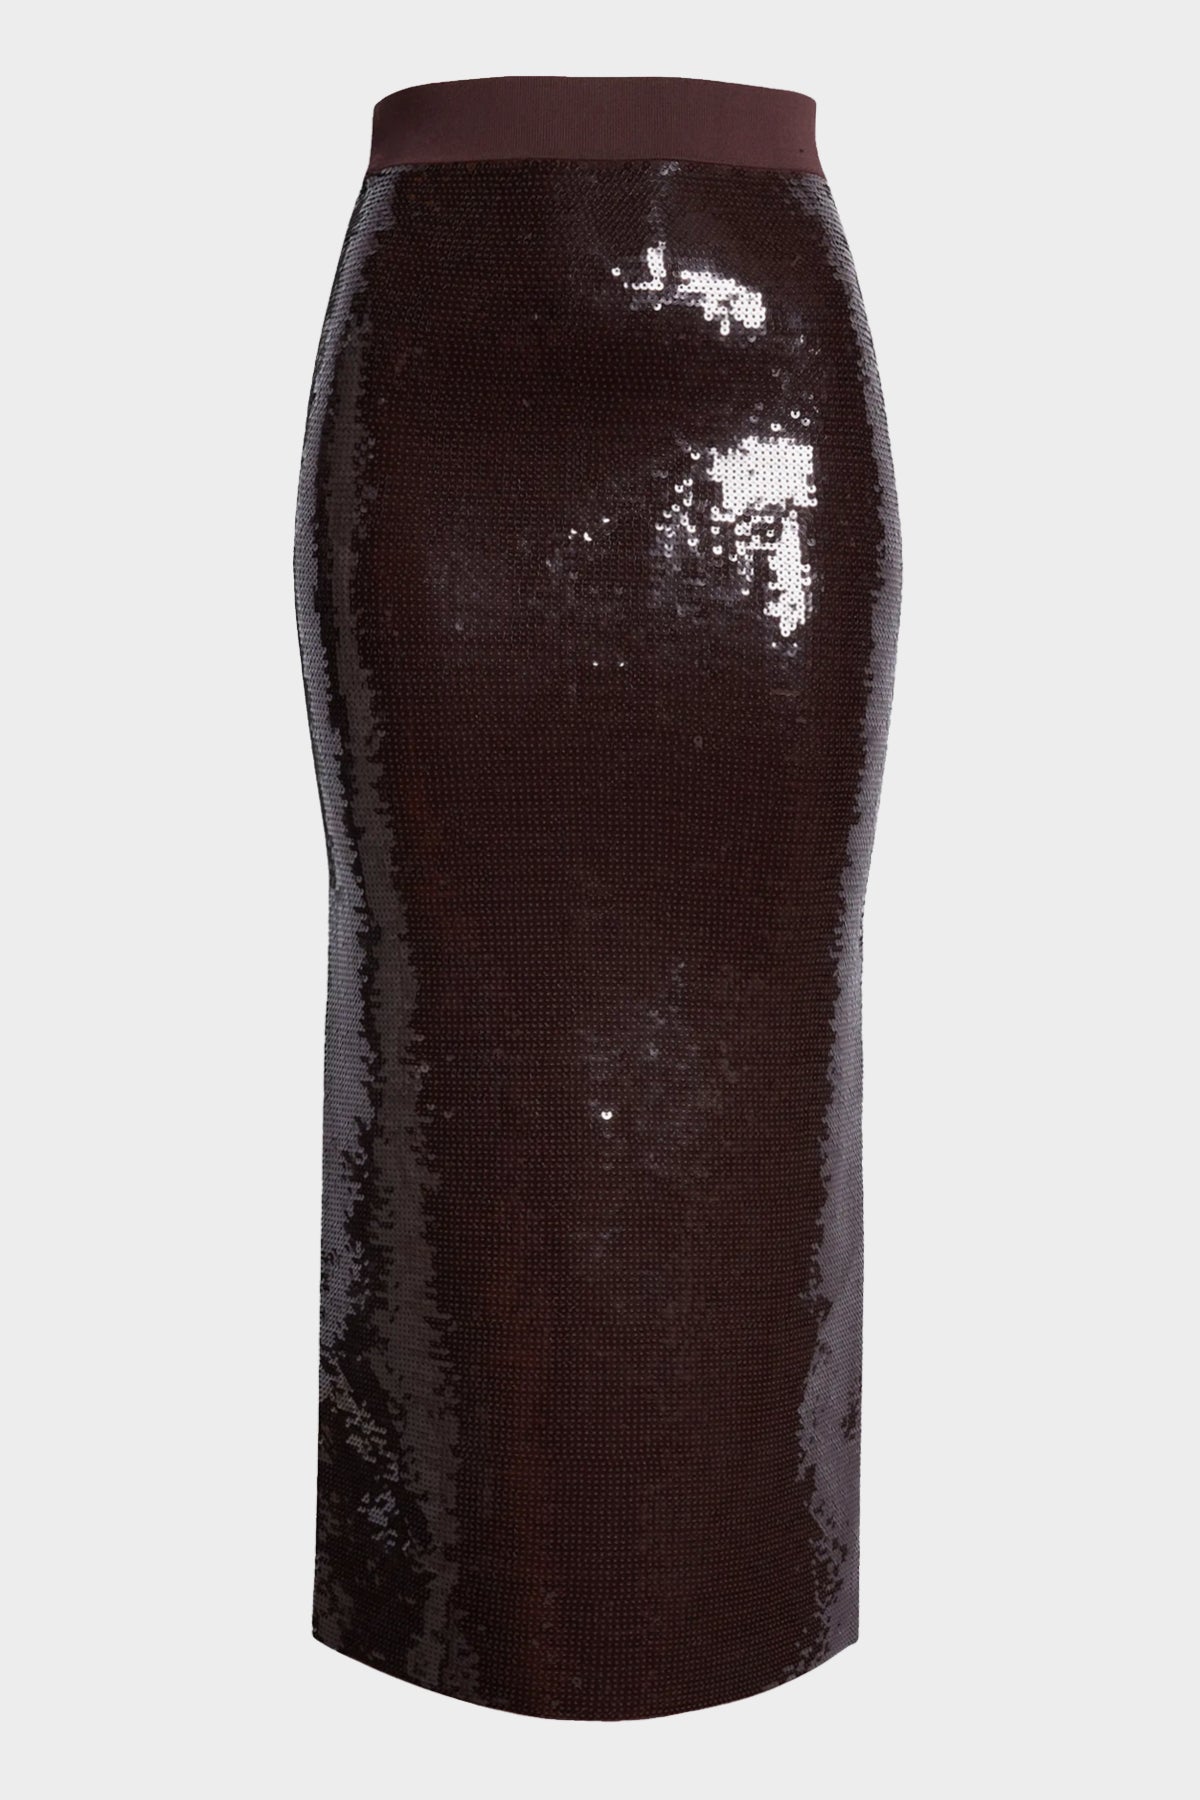 Joan Sequin Knit Skirt in Dark Brown - shop-olivia.com